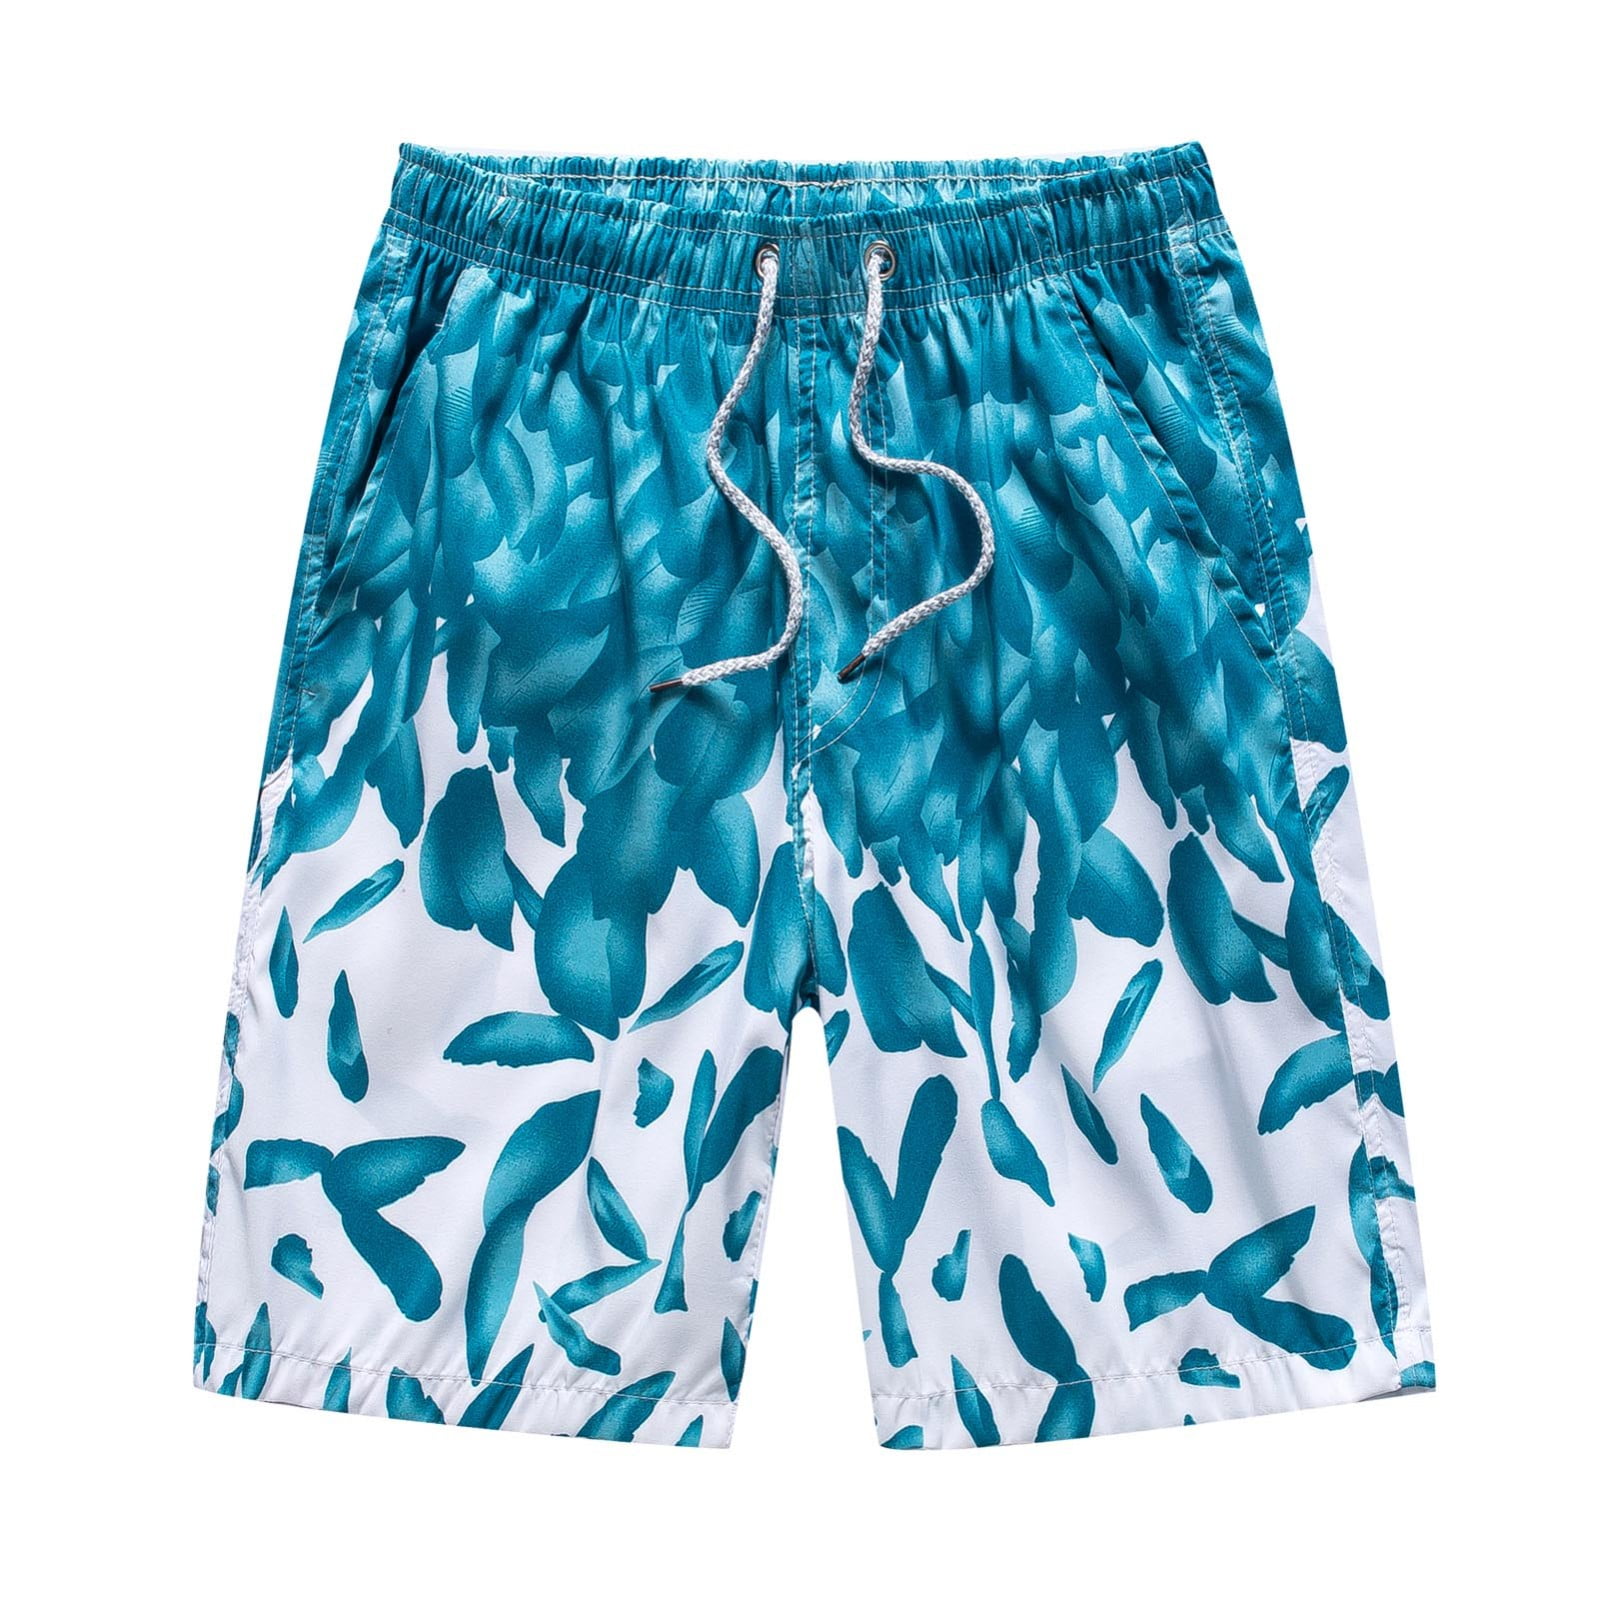 Hateone Mens Swimming Trunks 3D Print Beach Board Shorts & Pocket Teen Boy Mesh Lining